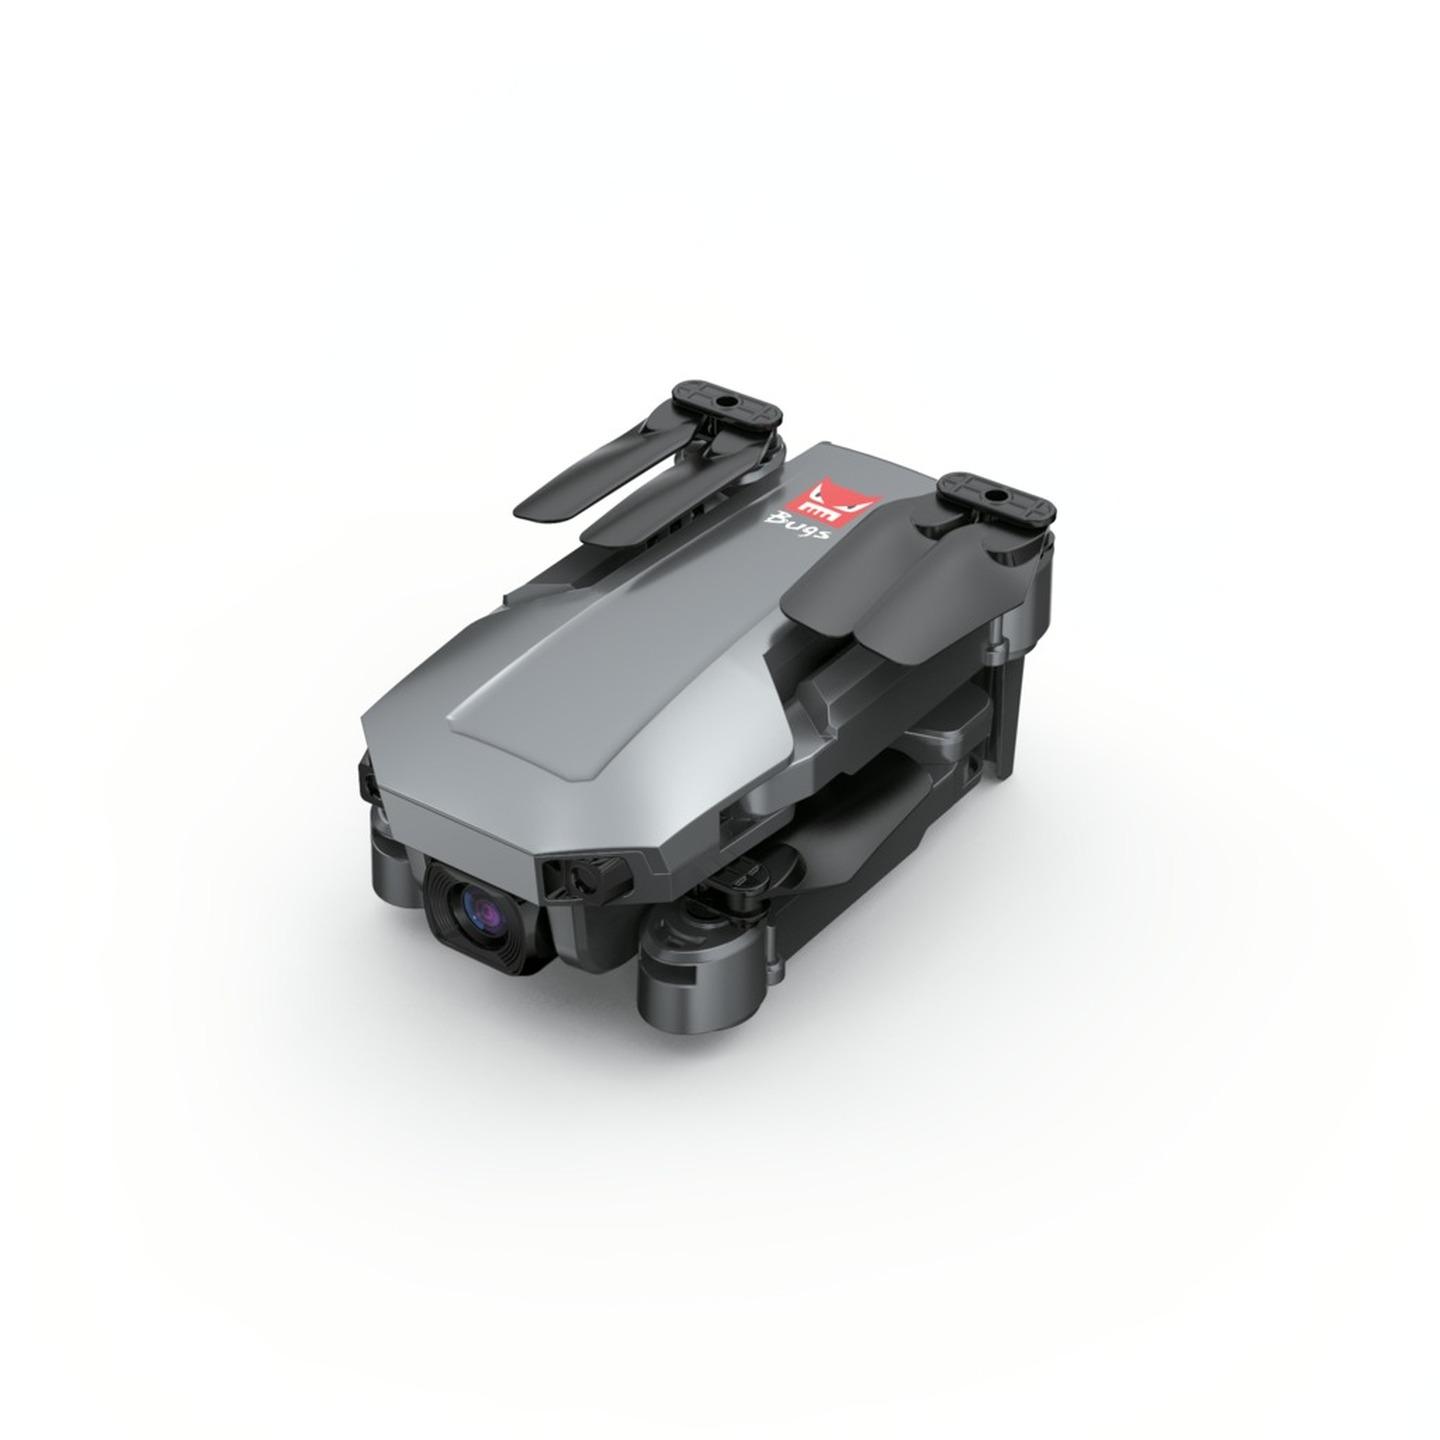 Bugs R/C Mini Drone with 1080p Camera